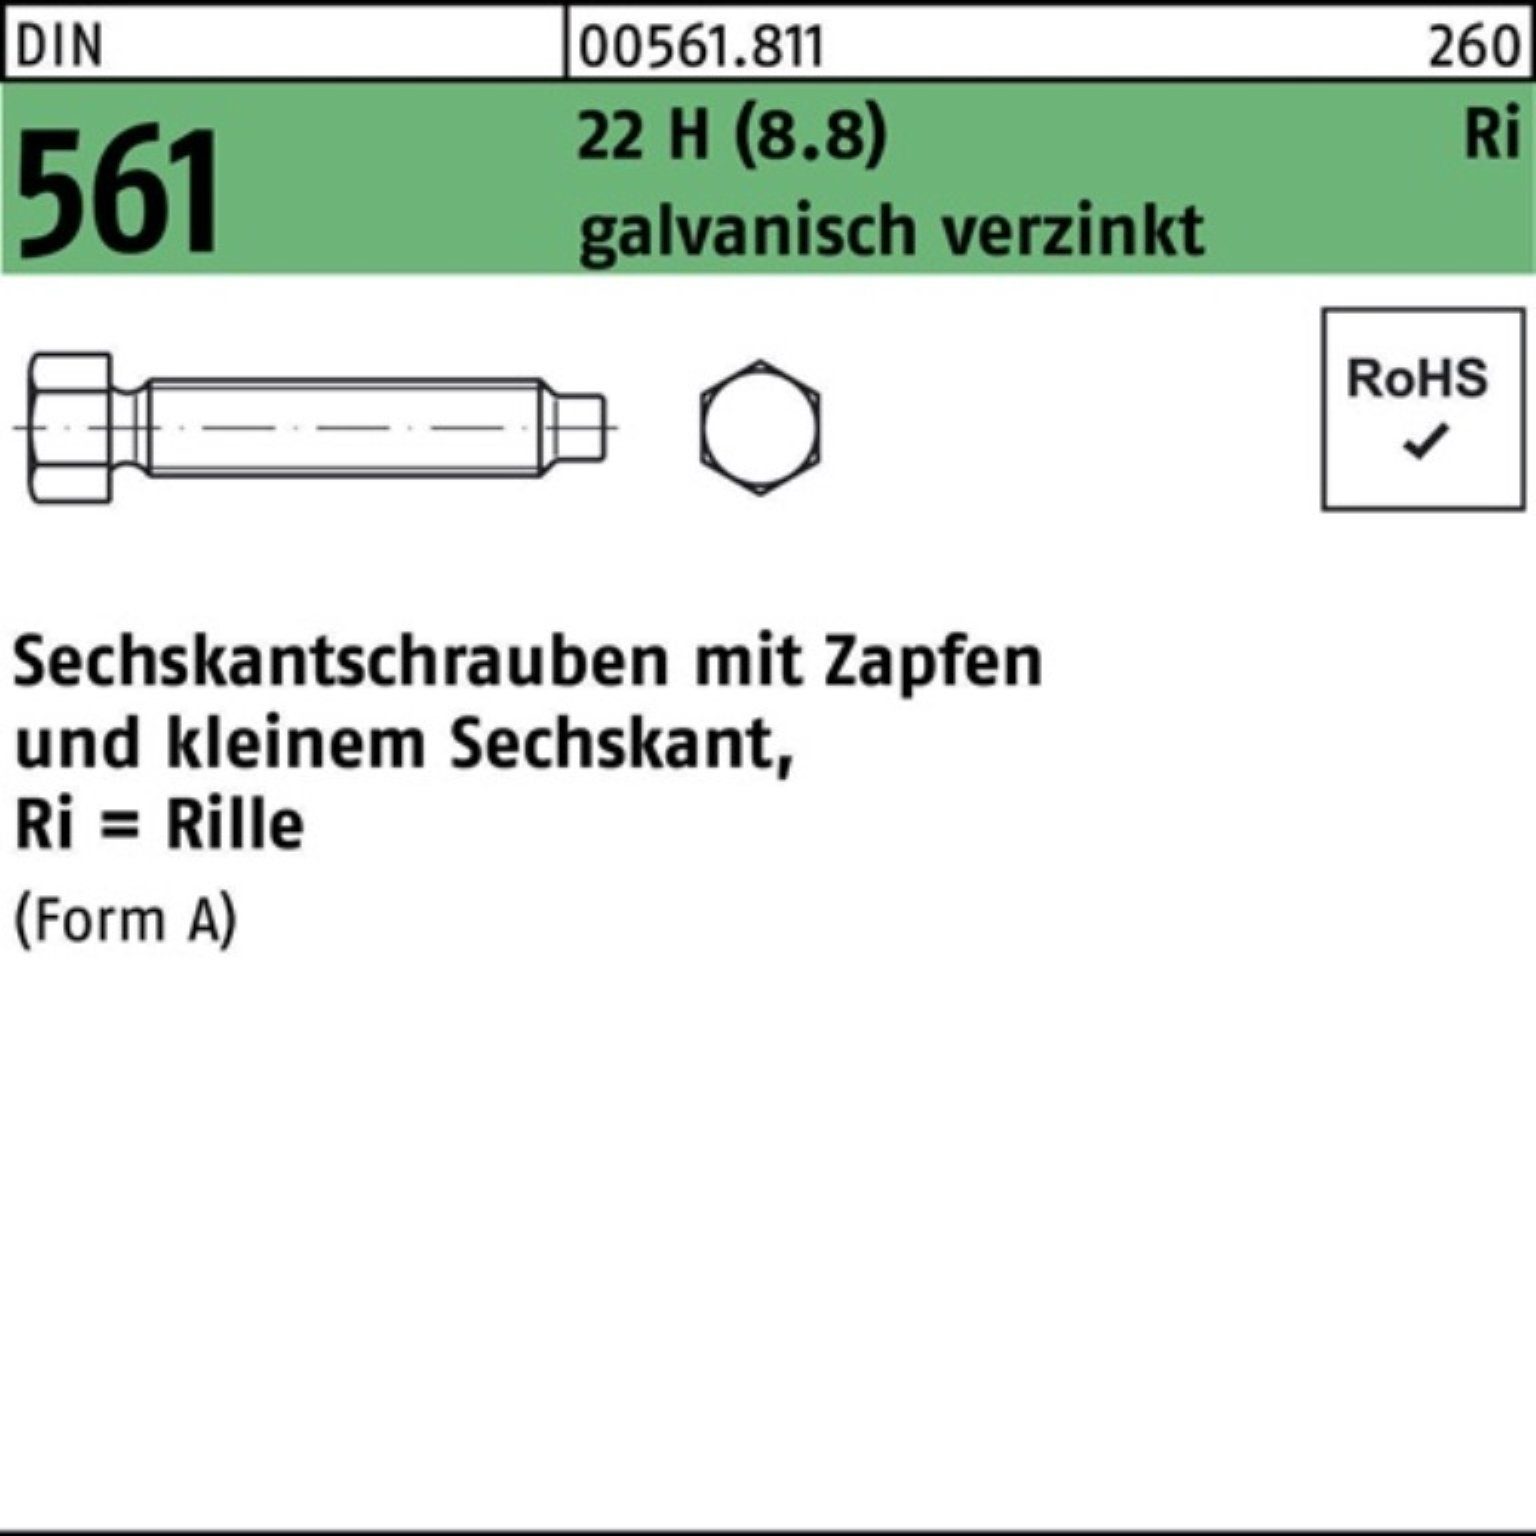 Reyher Sechskantschraube 100er Pack Sechskantschraube DIN 561 Zapfen AM 20x100 22 H (8.8) galv.